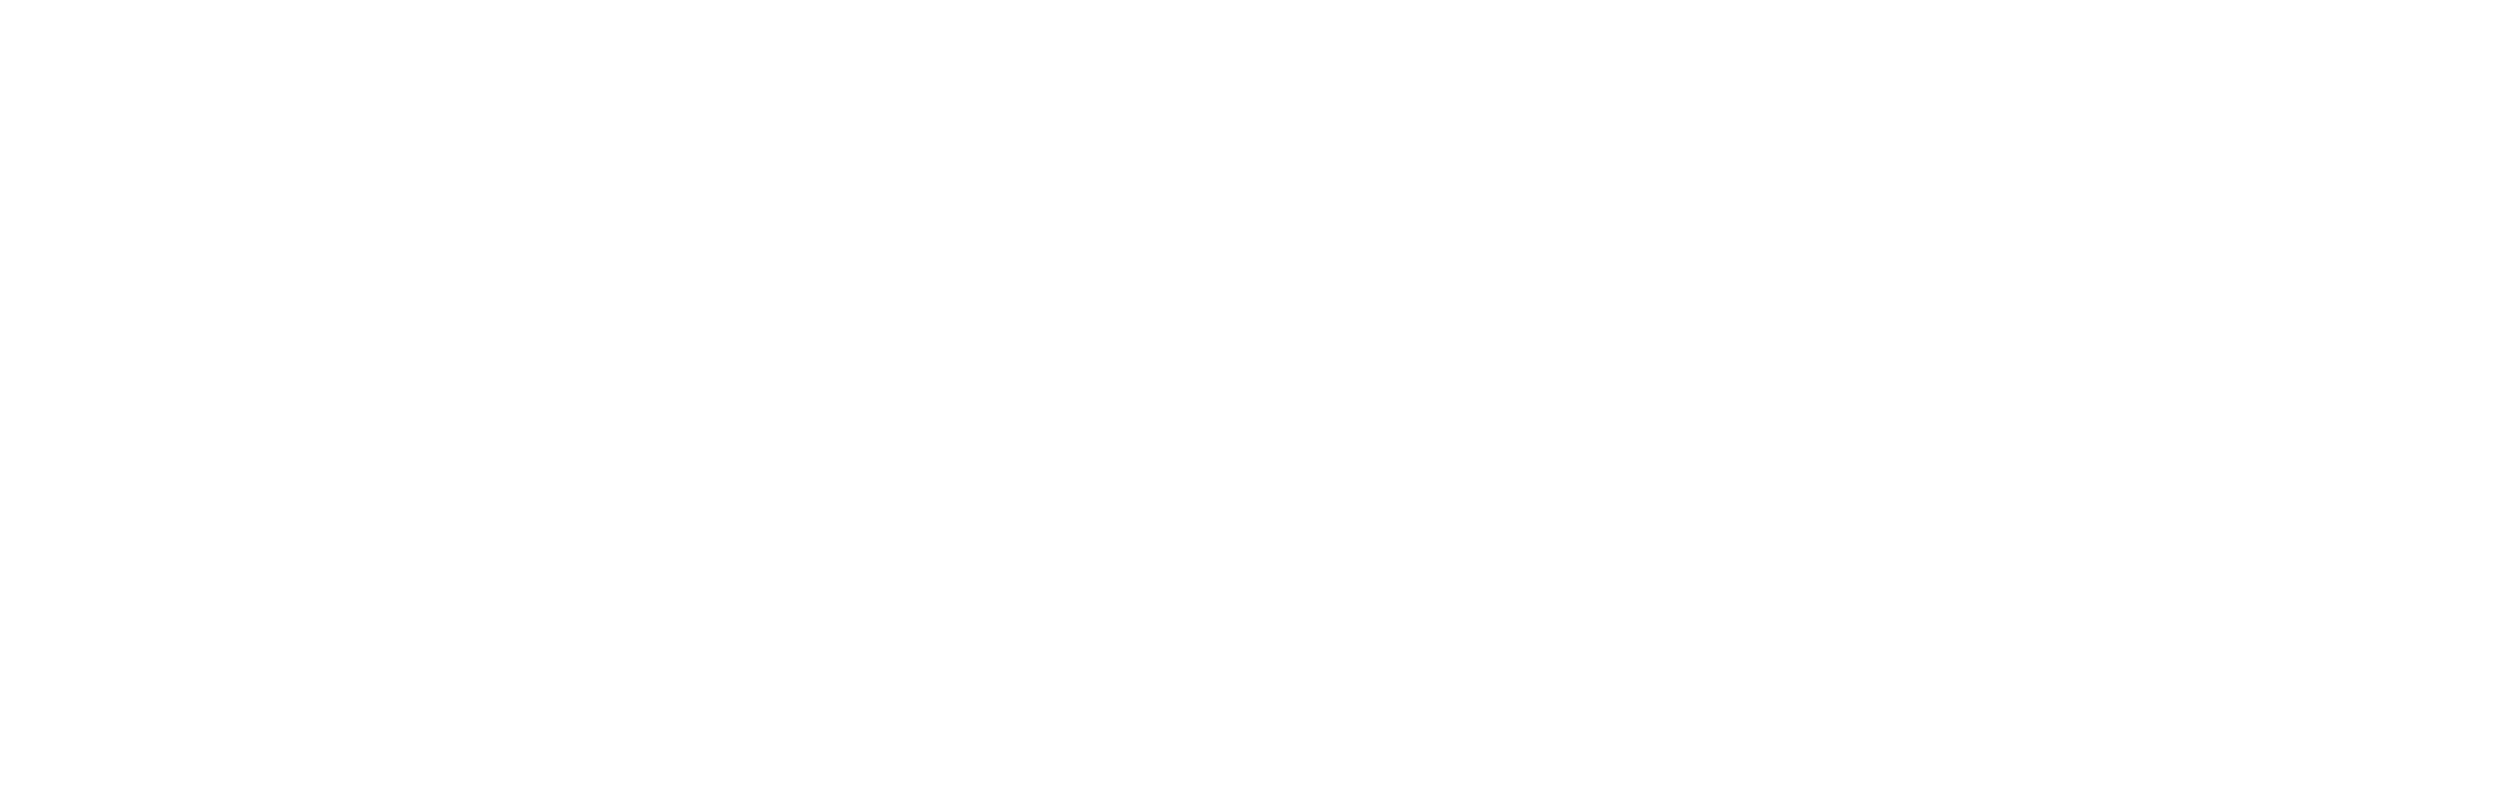 RCGP-logo.png